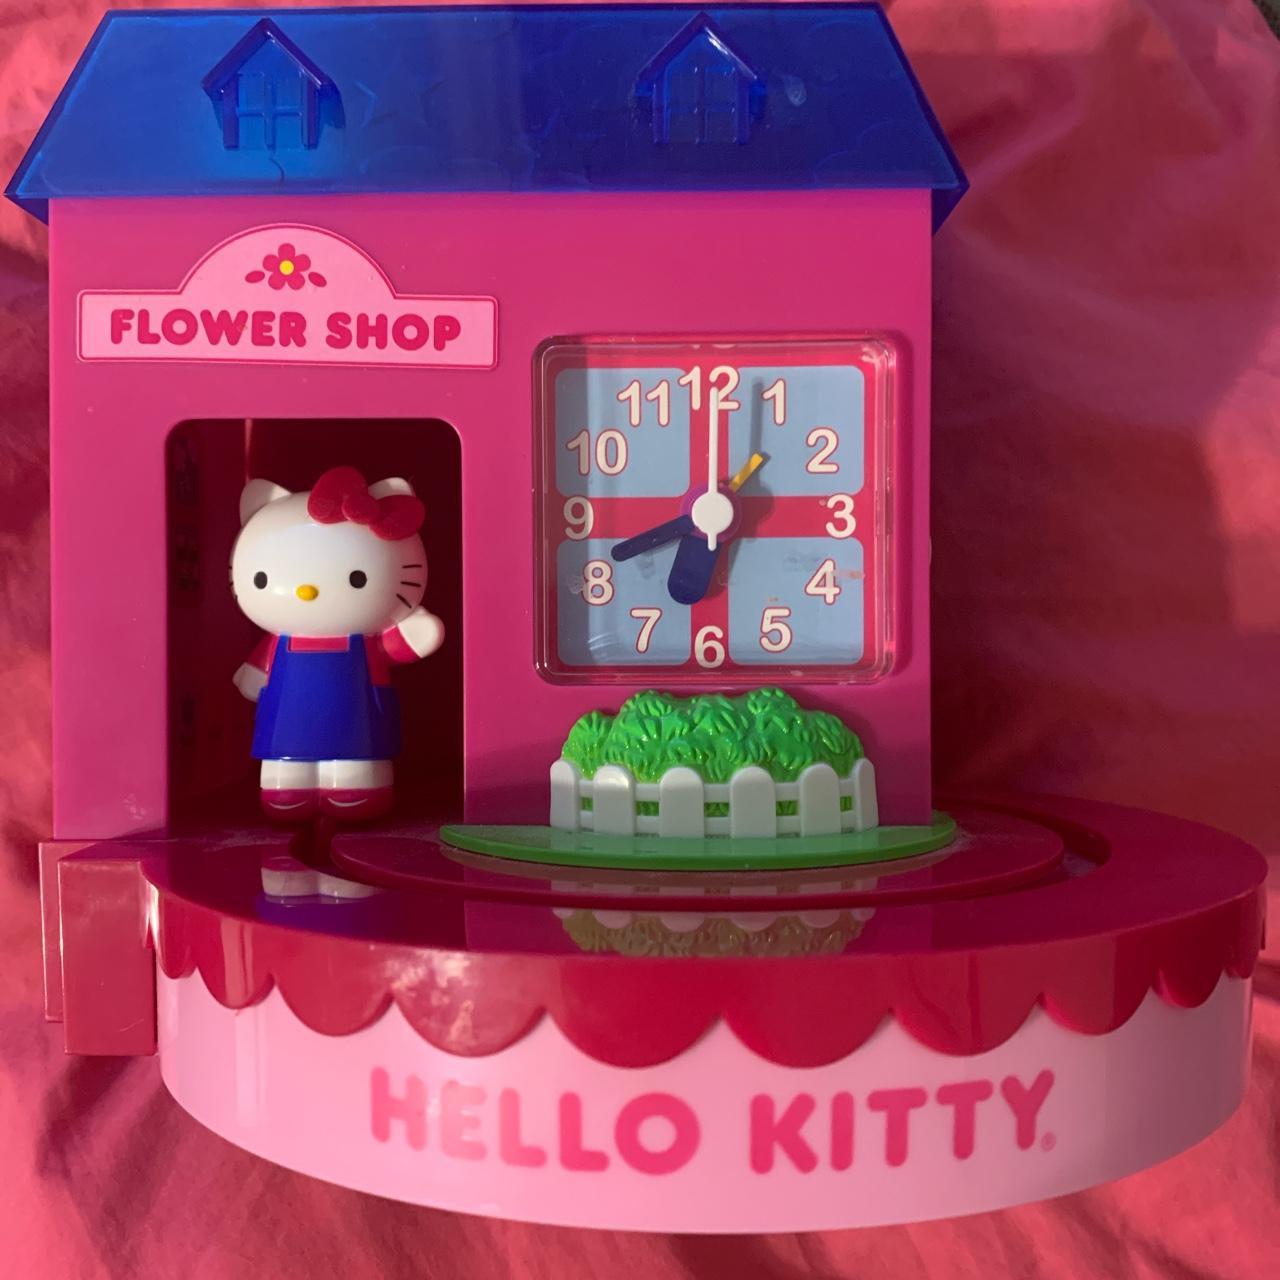 Sanrio Hello Kitty Digital Alarm Clock Vintage Pink Flowers Tested and Works